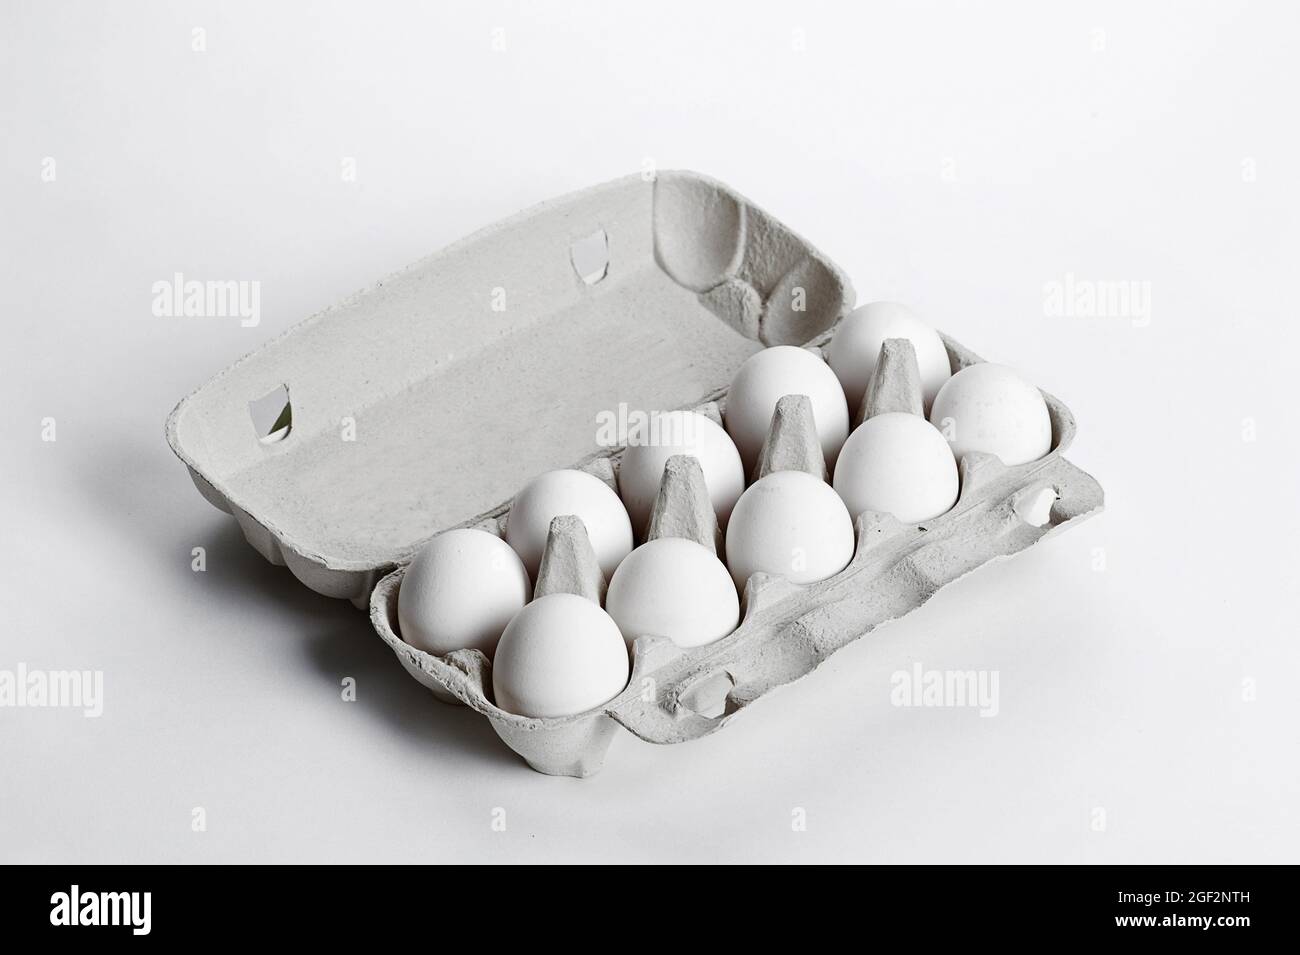 White eggs in an egg box Stock Photo